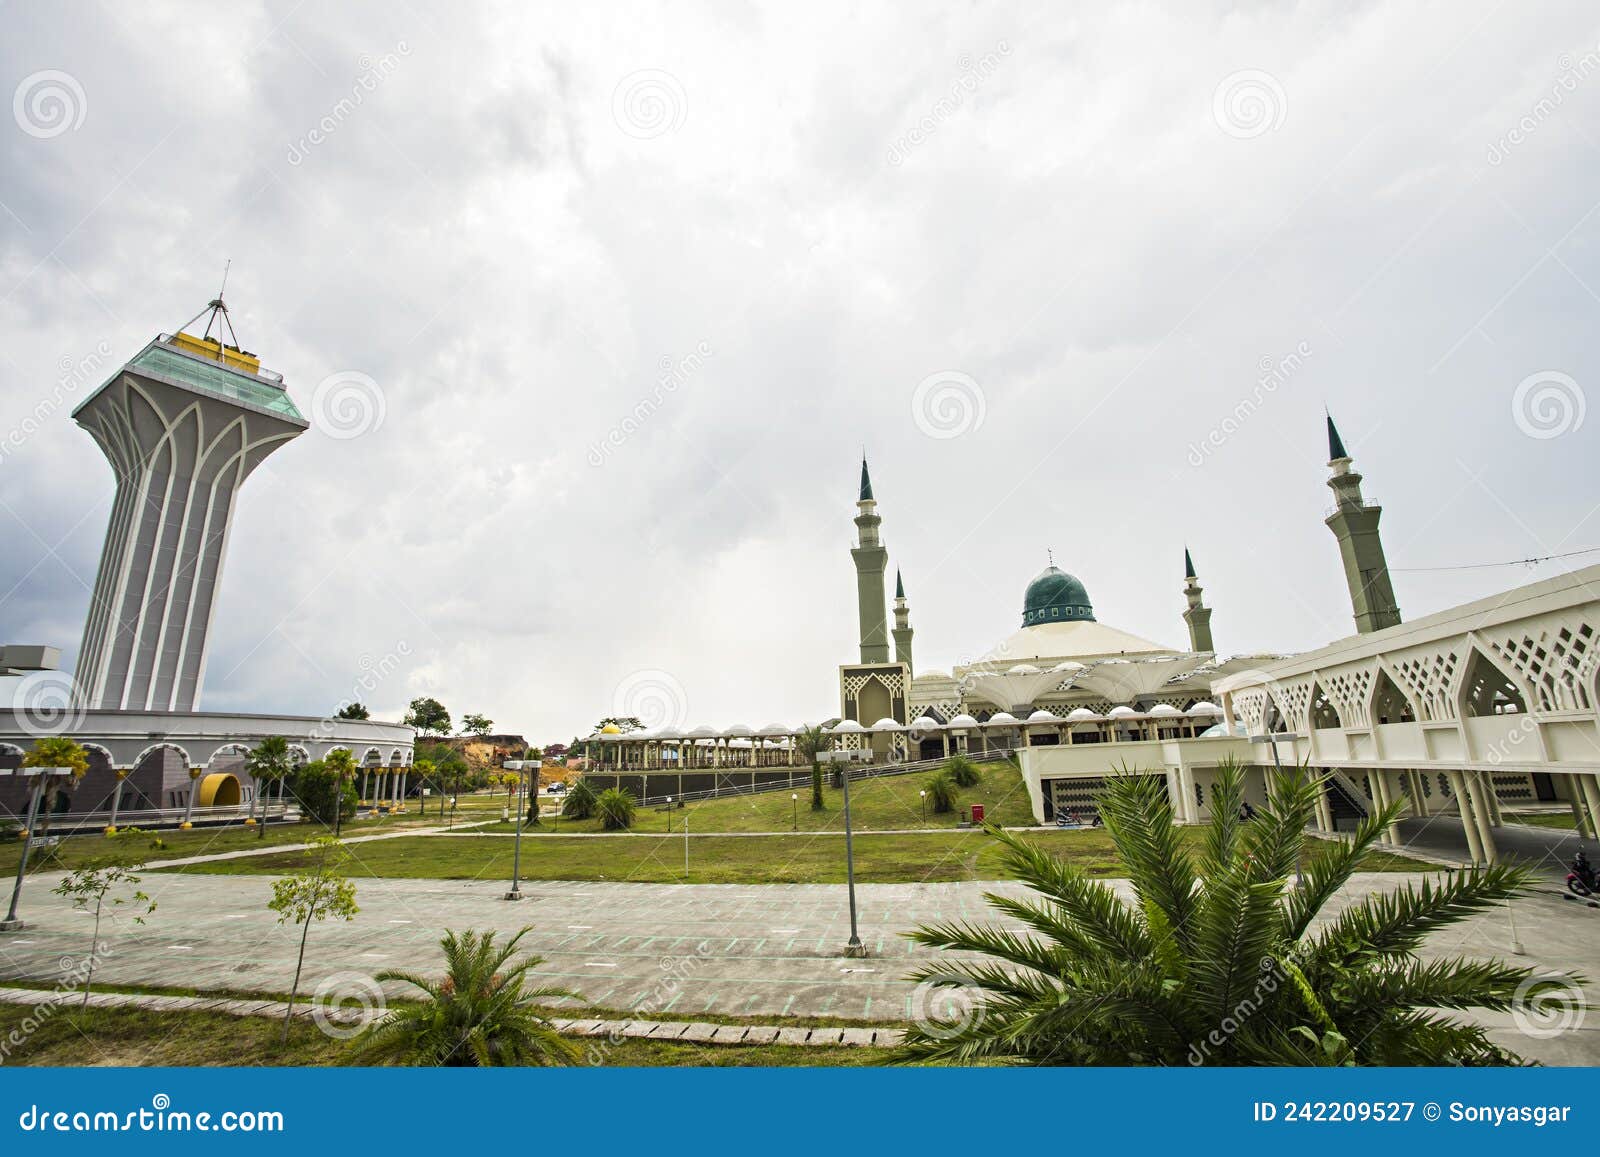 madinatul iman mosque, the biggest mosque in balikpapan city, east kalimantan, indonesia.